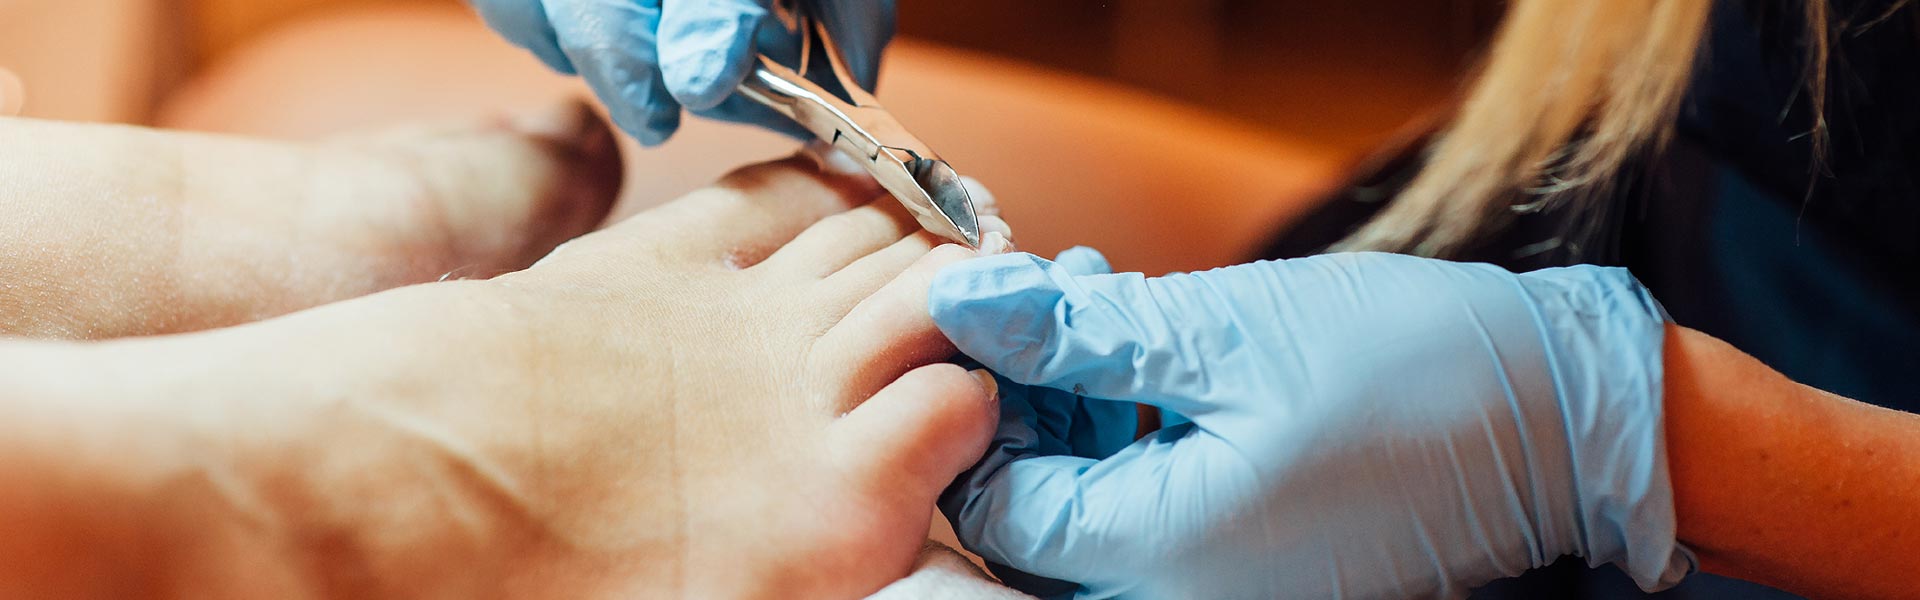 Nails & ingrown toenail treatments